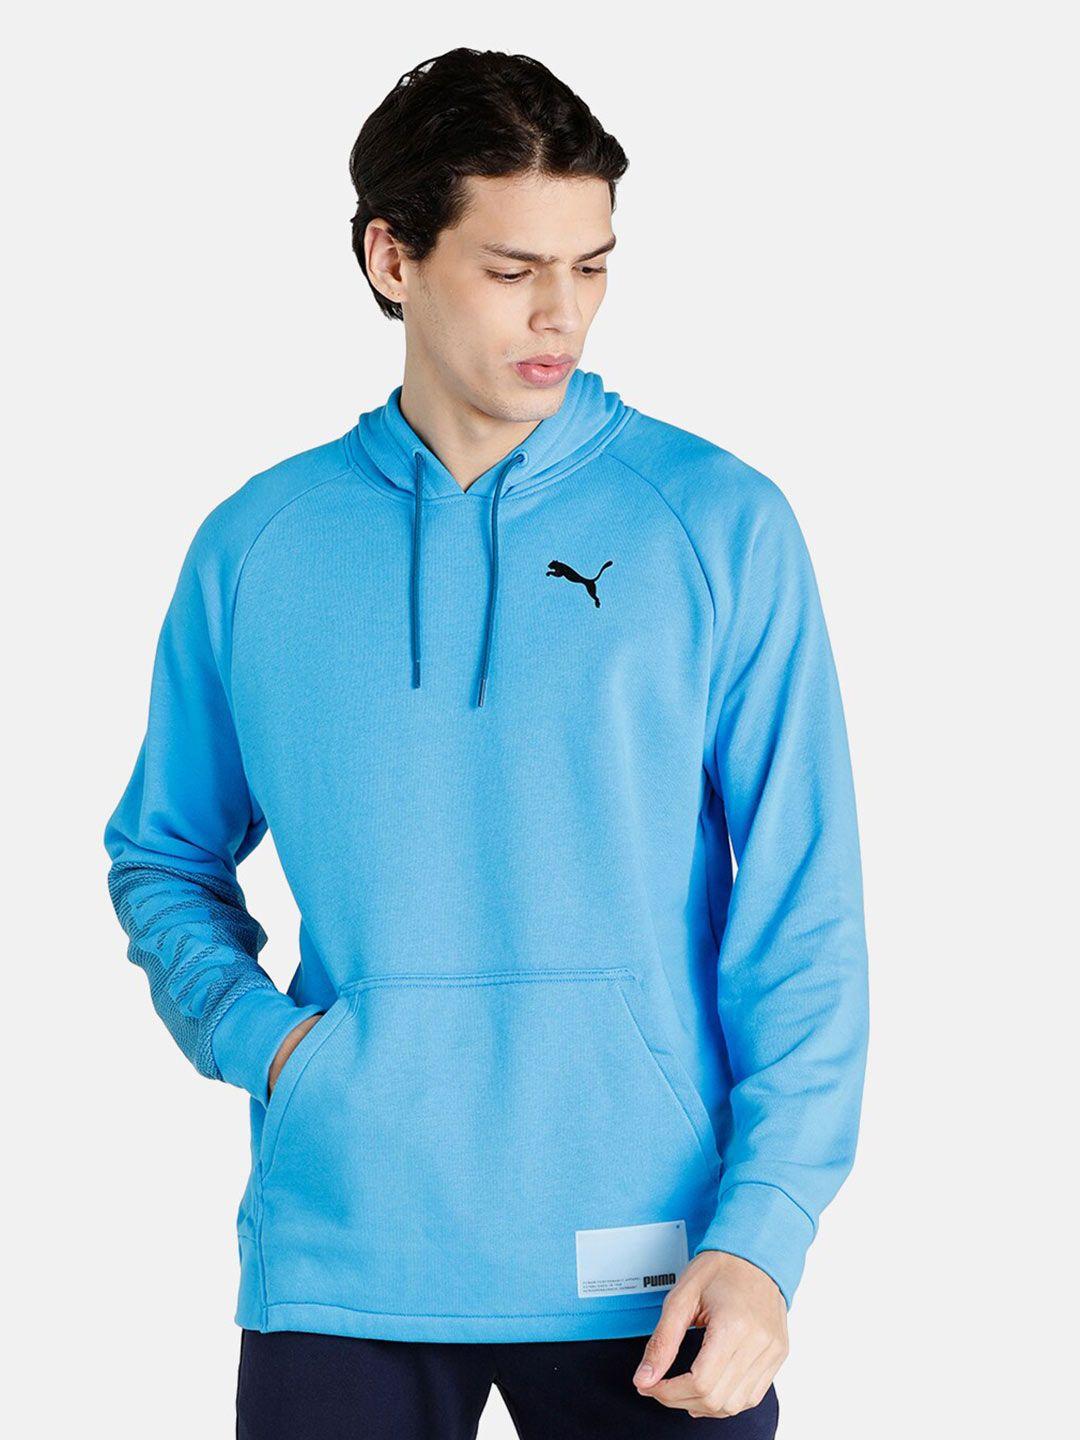 puma-men-blue-hooded-cotton-training-sweatshirt